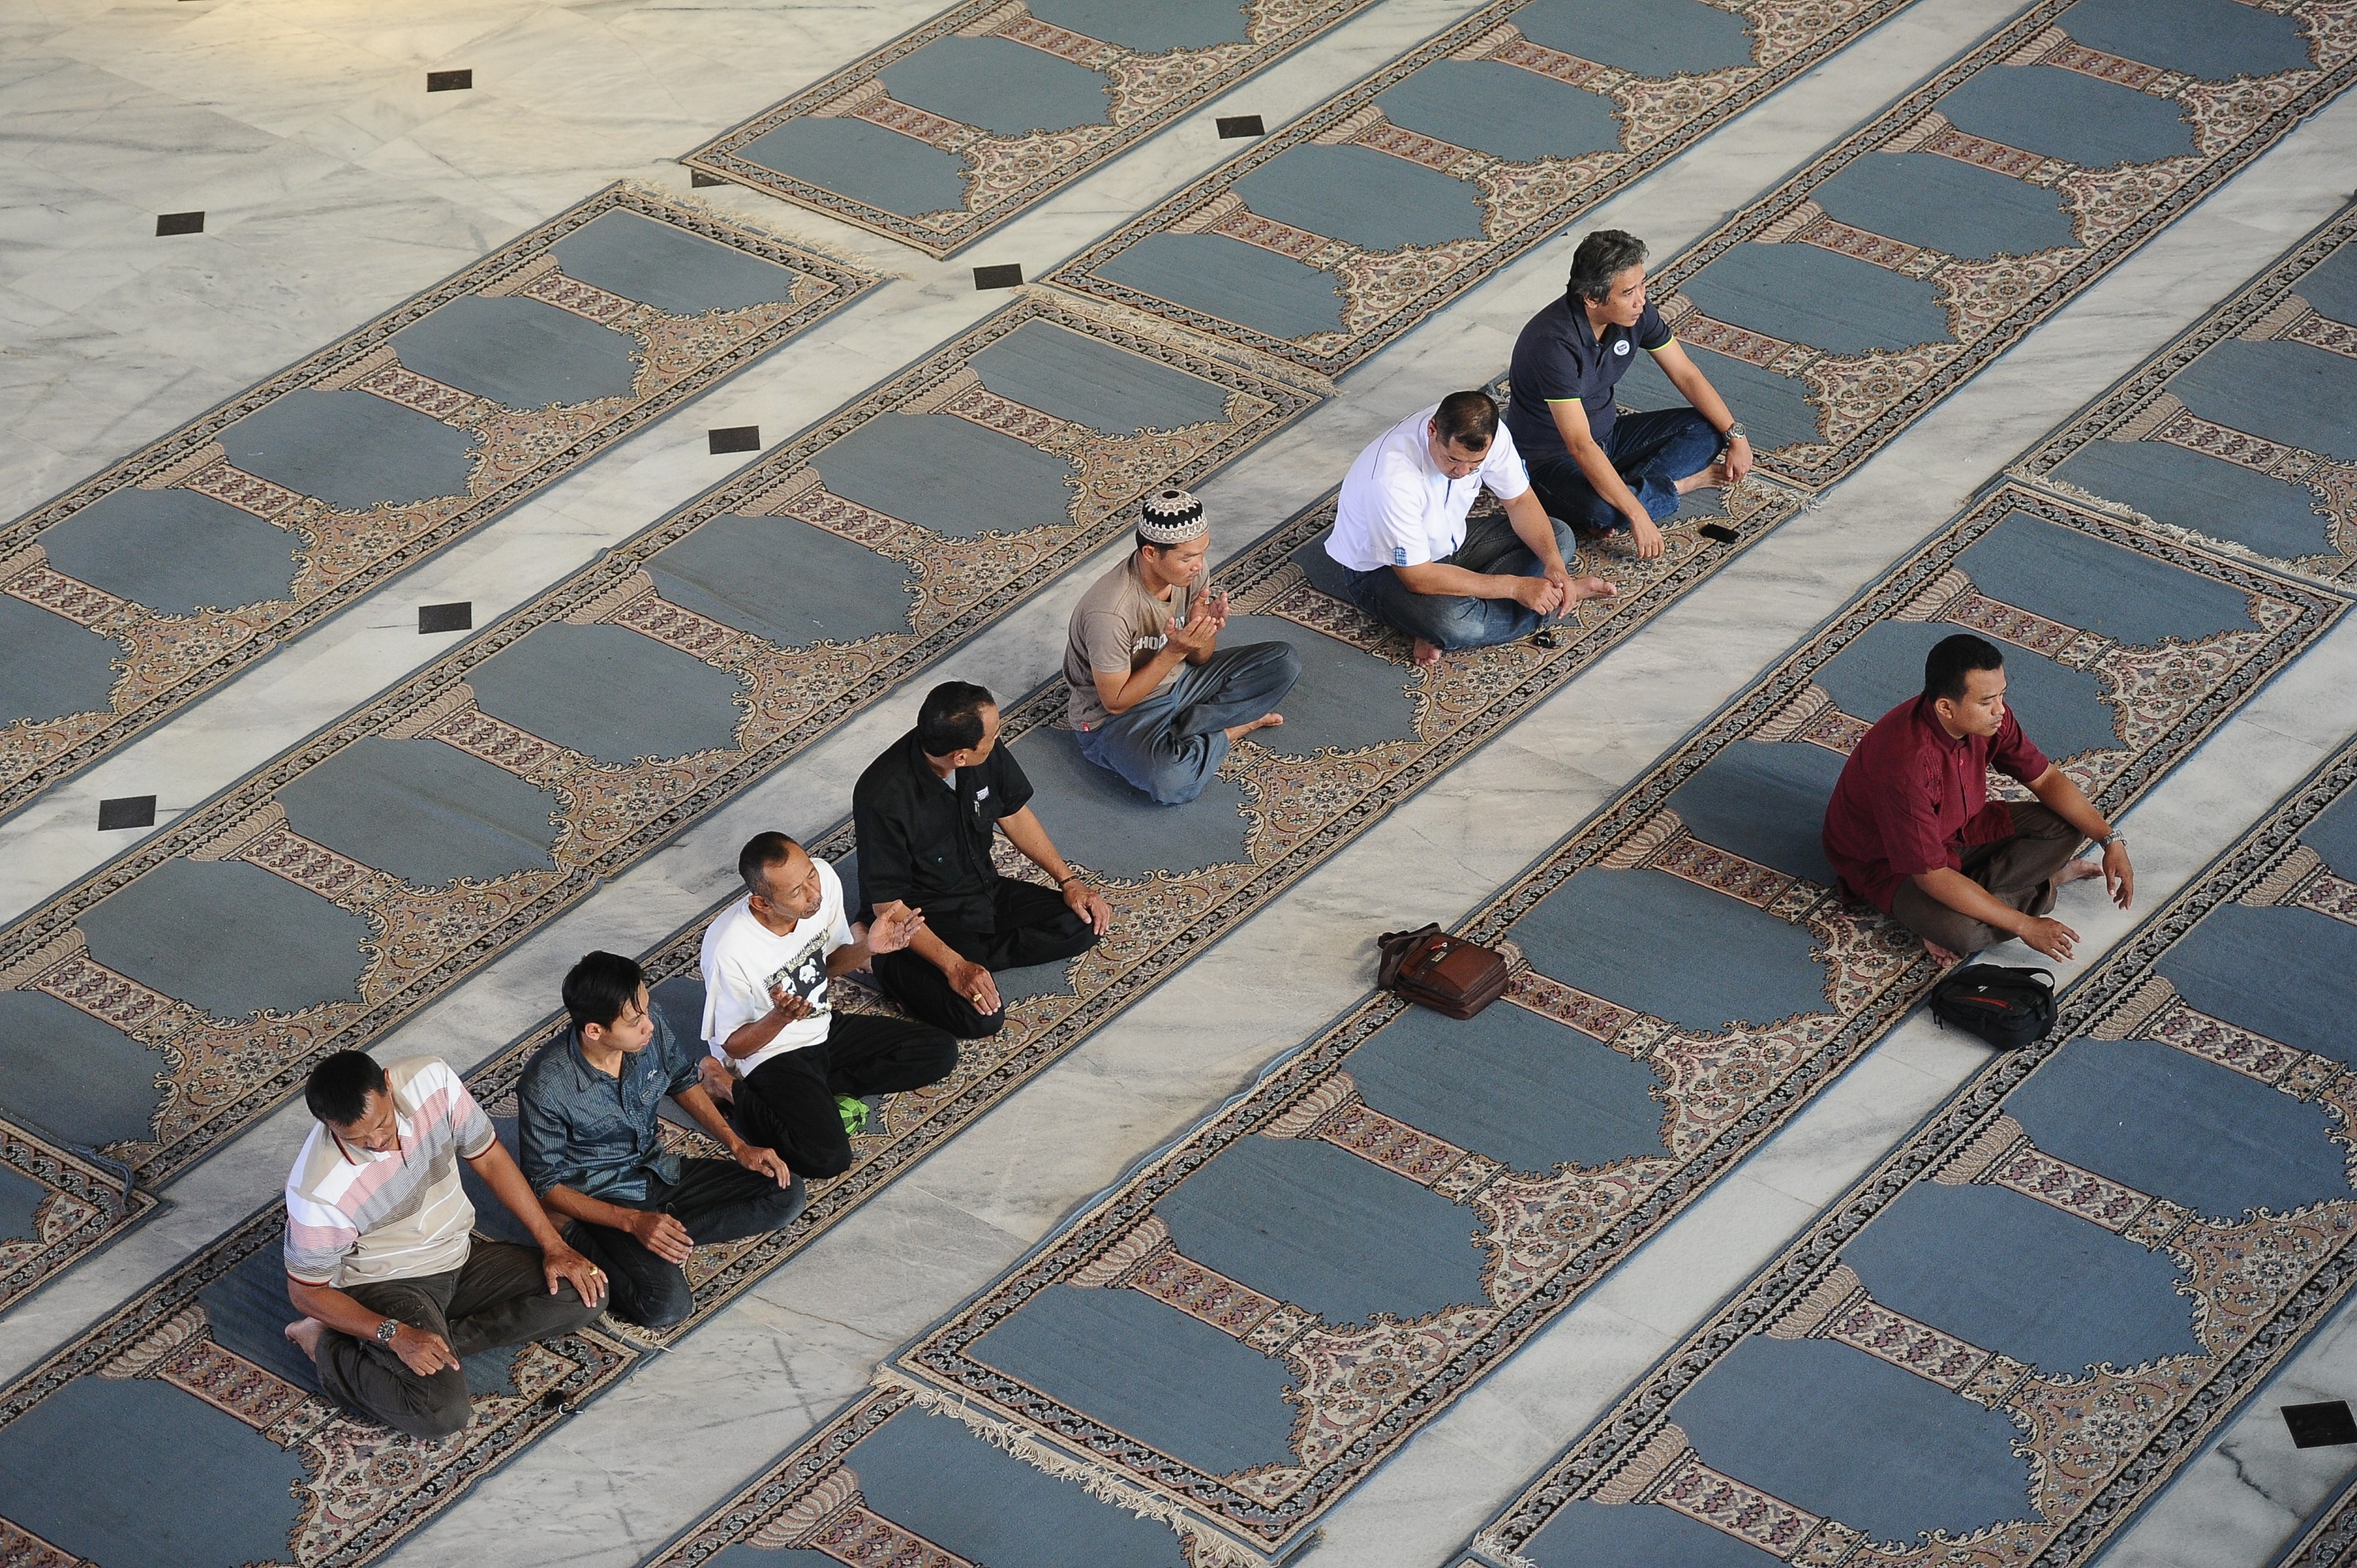 Muslims pray before breaking of the fast during Ramadan on July 13, 2014 in Surabaya, Indonesia. (Robertus Pudyanto&mdash;Getty Images)